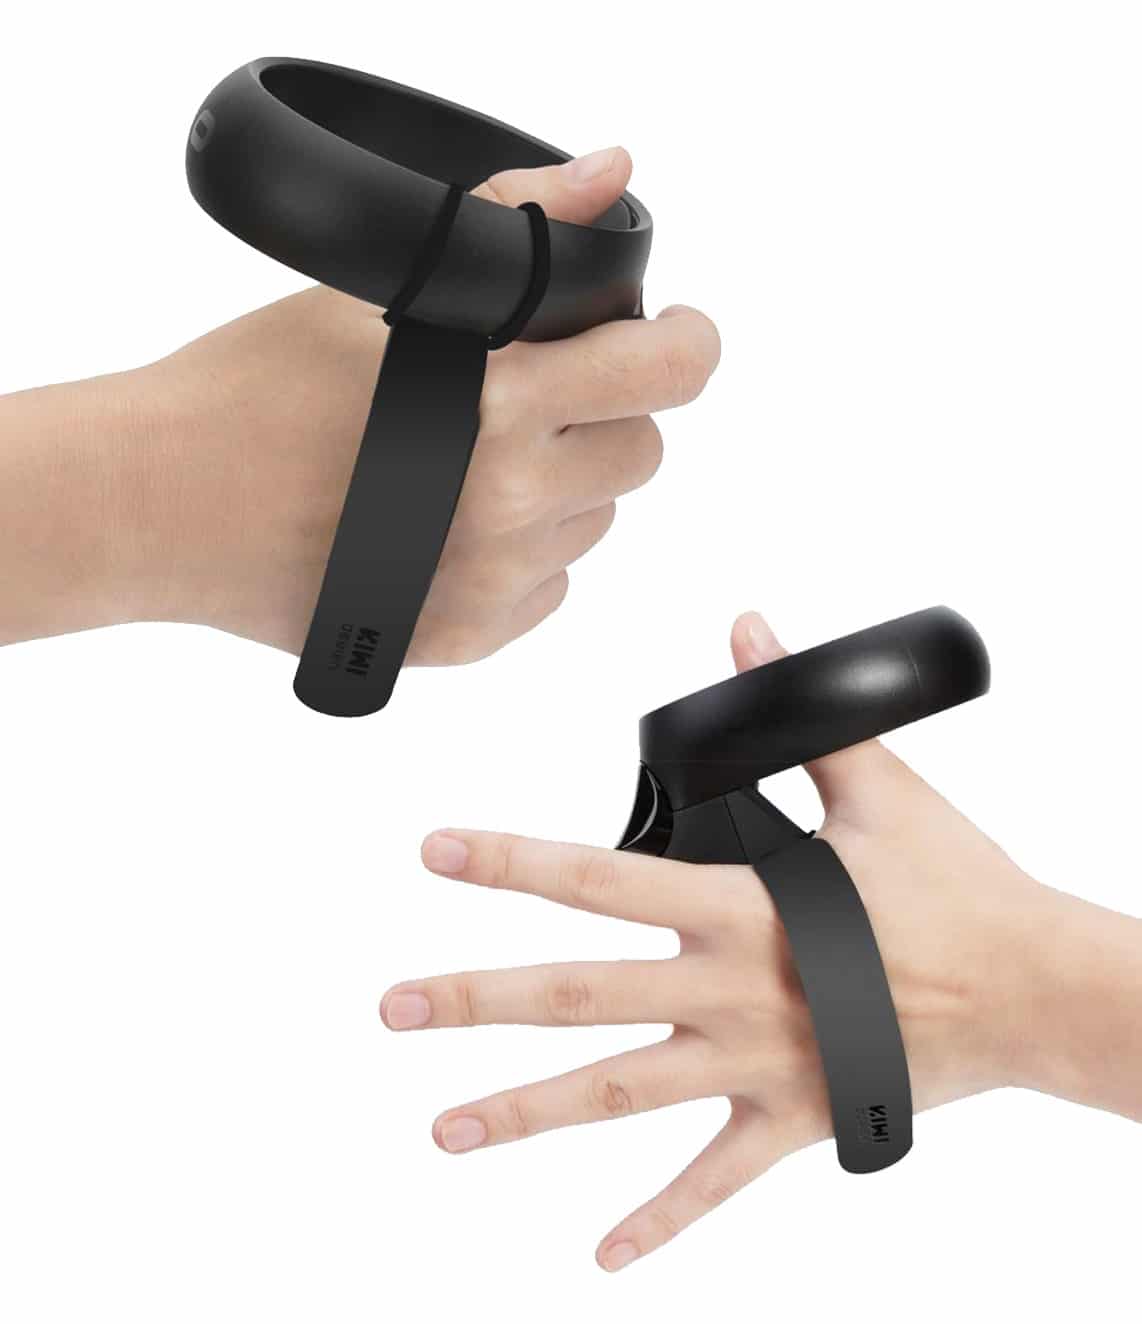 VR hand rehabilitation screen